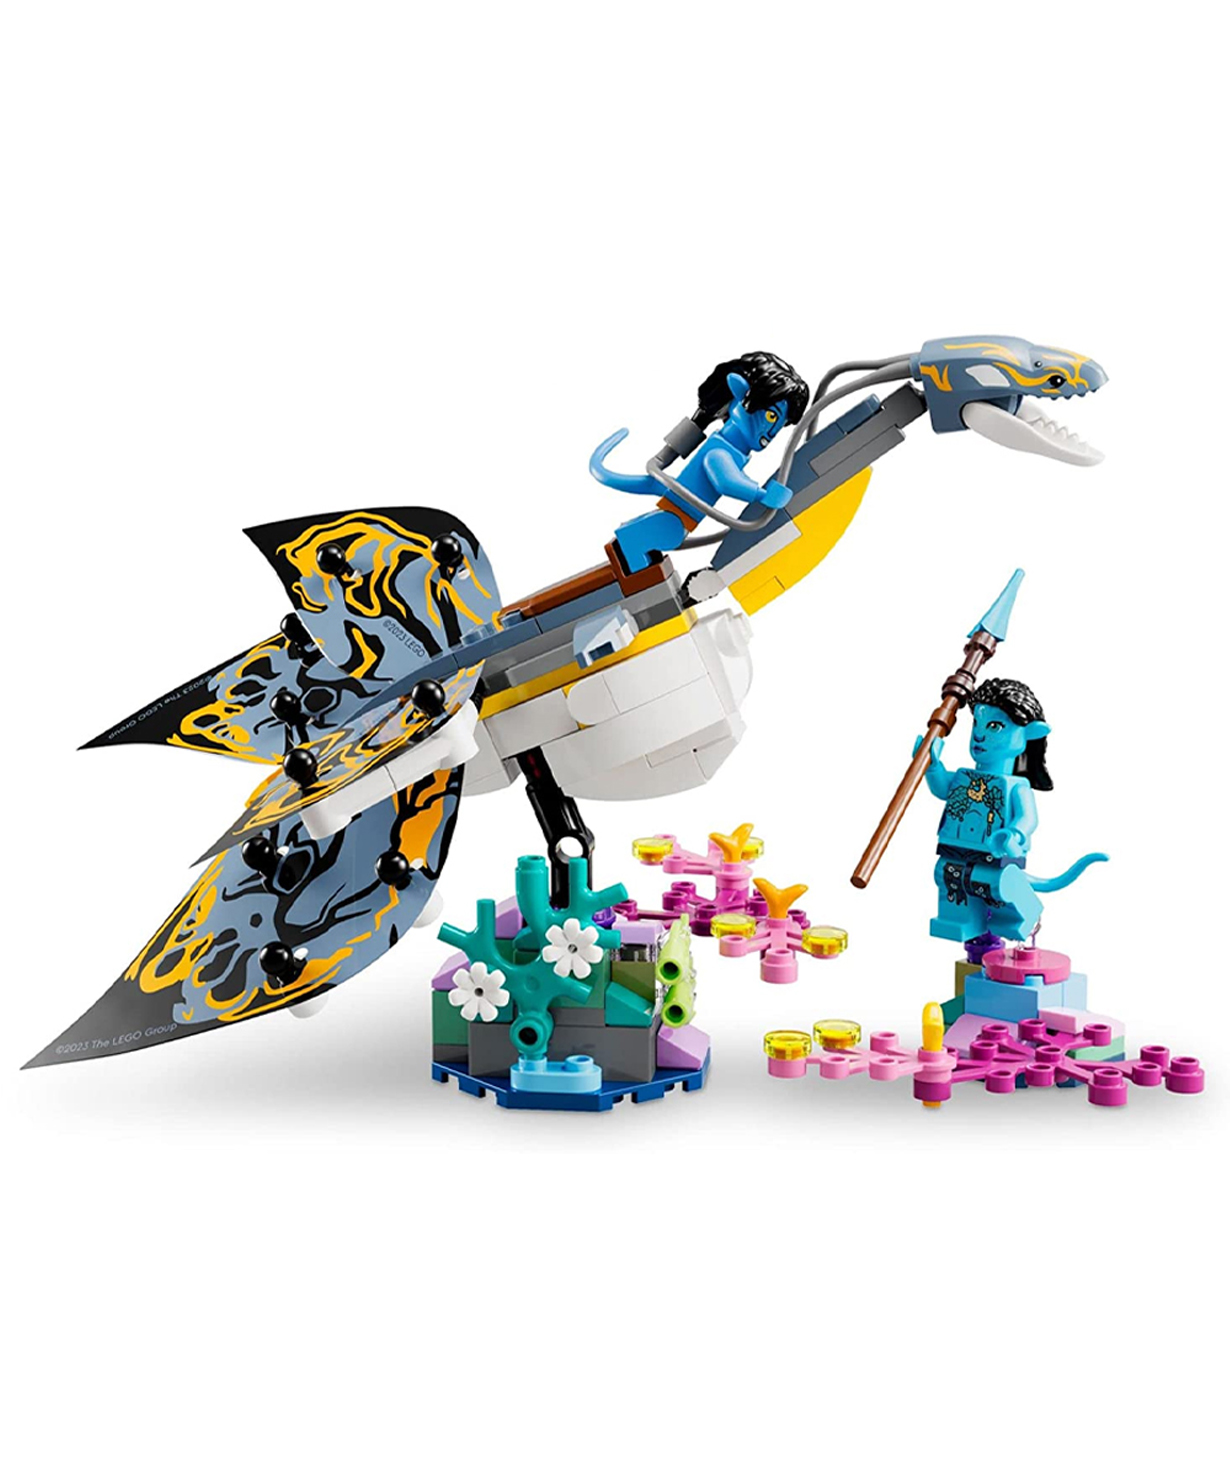 Constructor ''Lego'' Avatar, 179 details